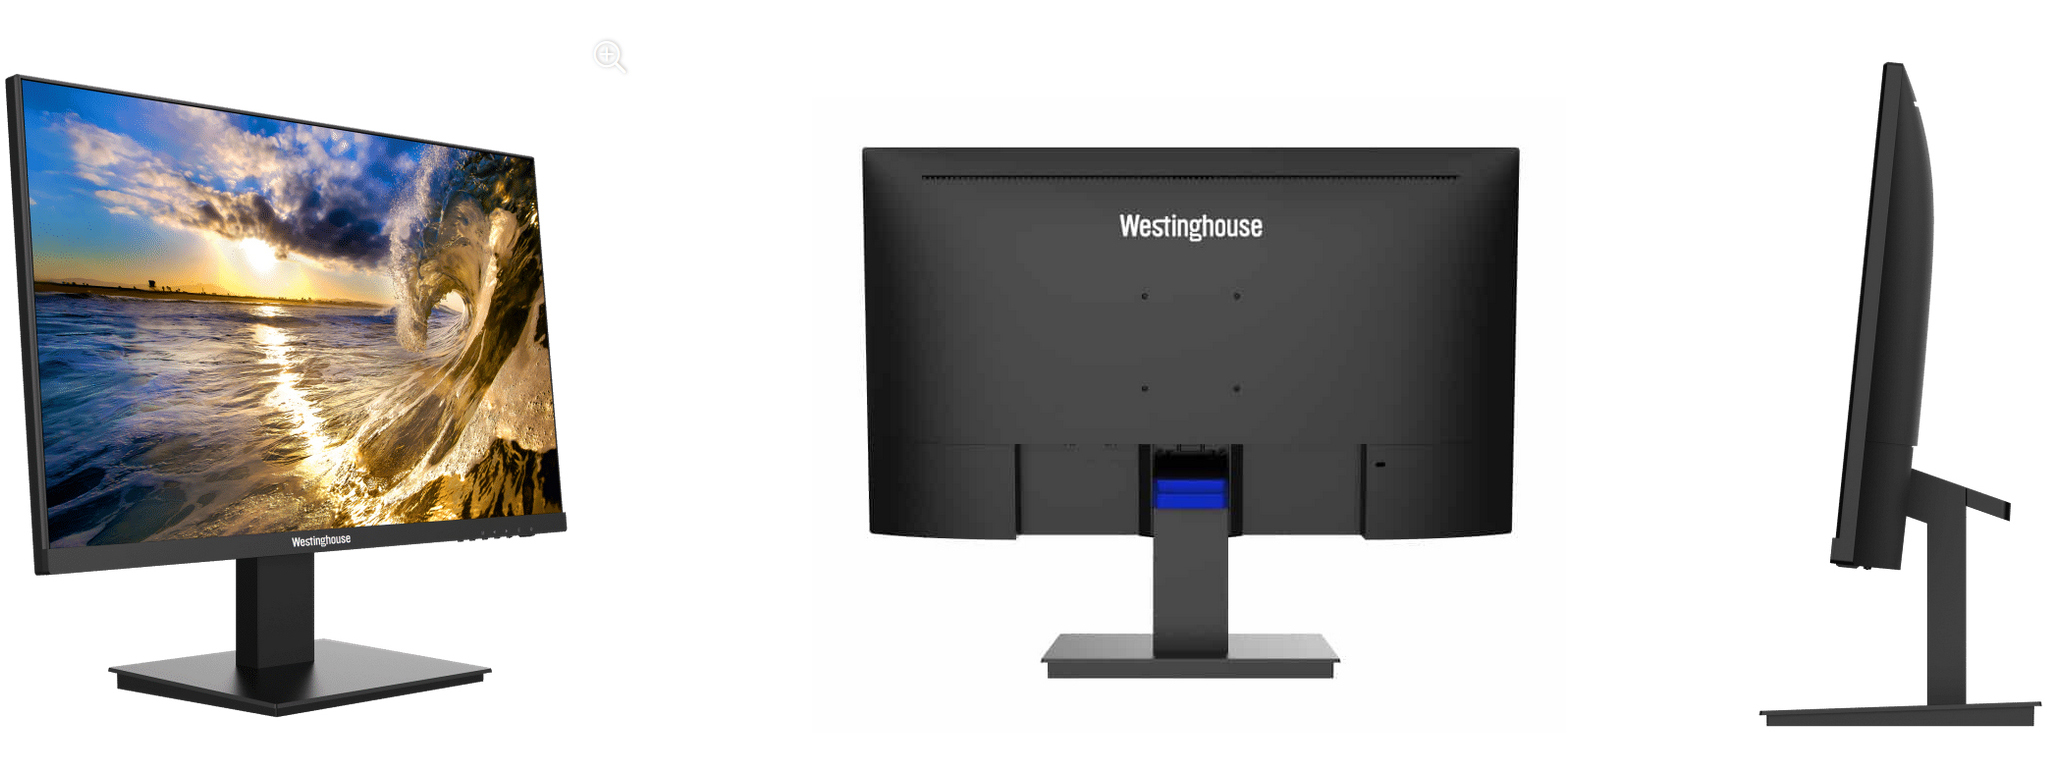 Westinghouse Monitor de computadora de oficina en casa Full HD 1080p LED VA  de 22 pulgadas, monitor de PC sin parpadeo de 75 Hz con sincronización